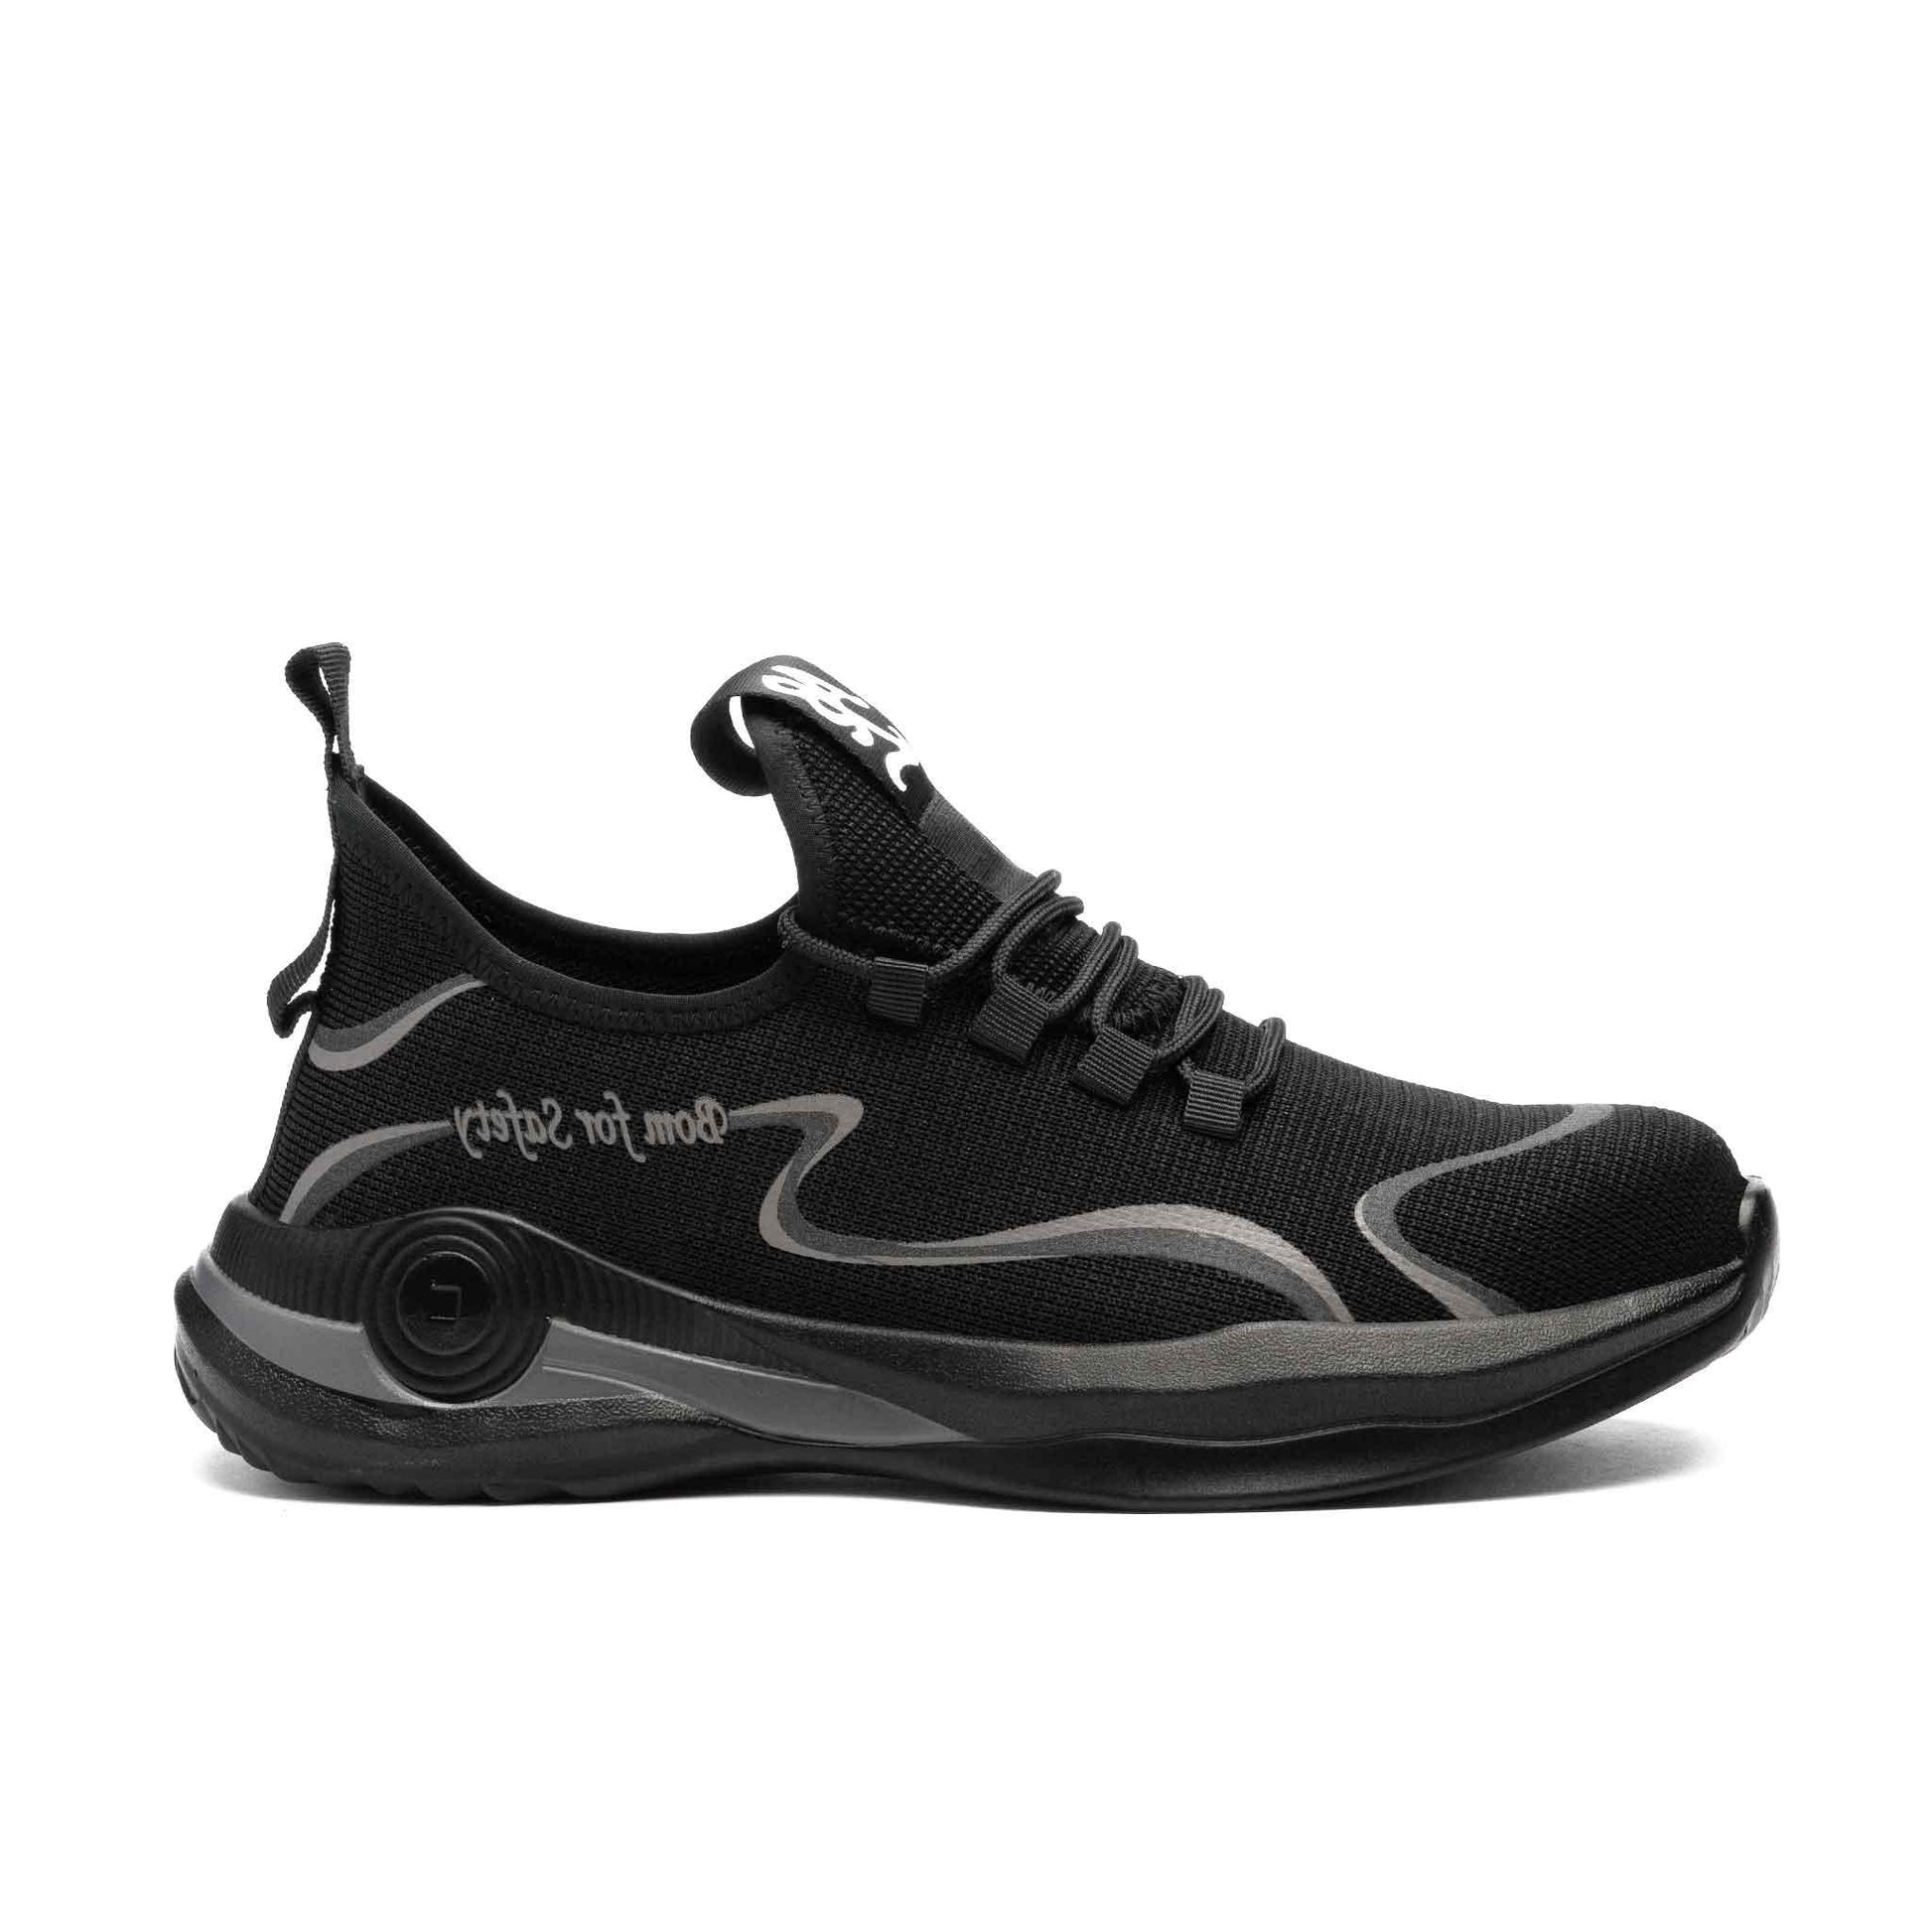 Men's Steel Toe Work Sneakers - Oil Resistant | B163 - USINE PRO Footwear